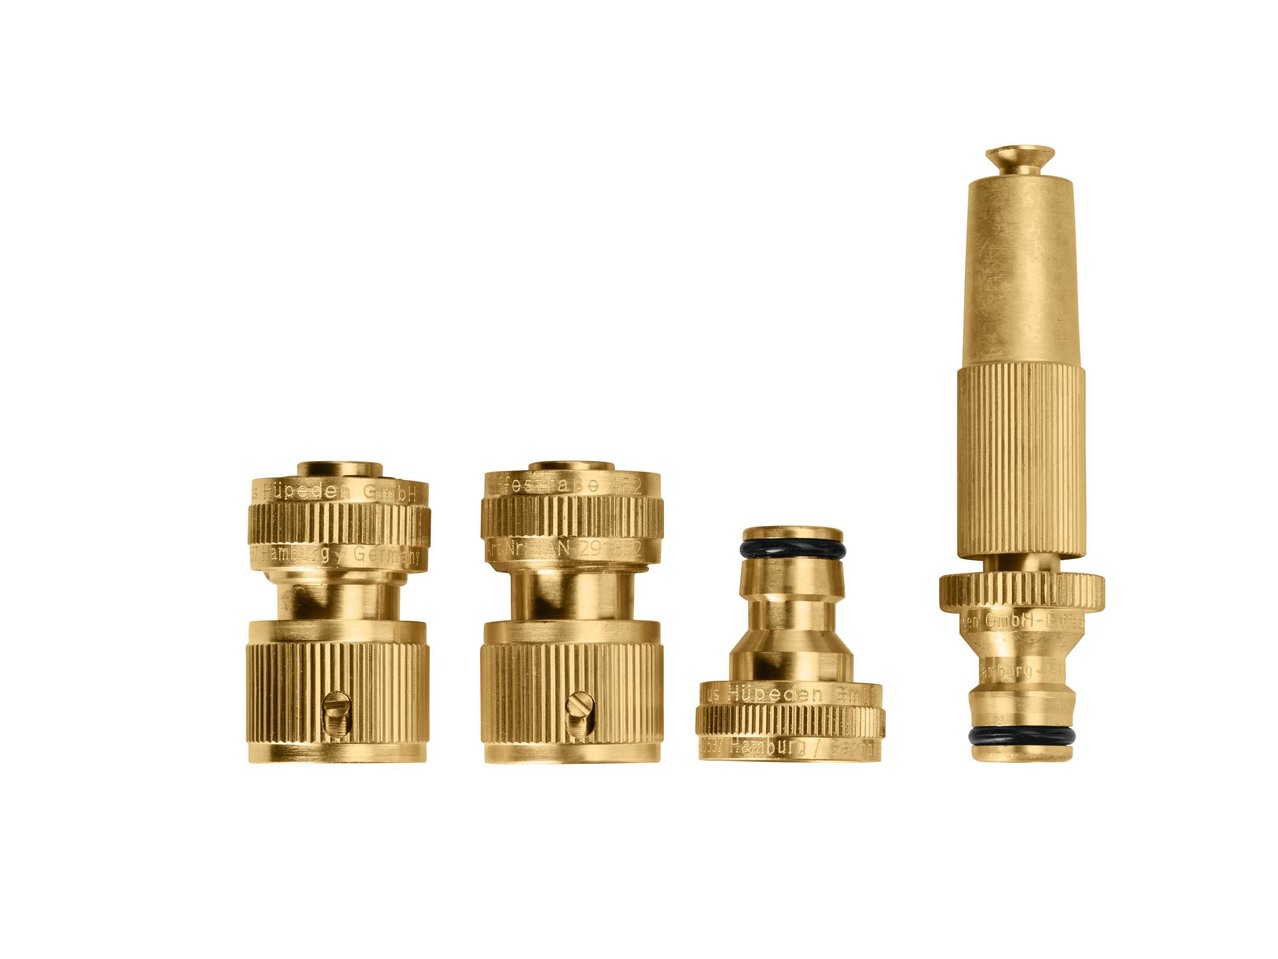 Brass Hose Connector System, 4 pieces or Brass 2-Way Hose Splitter